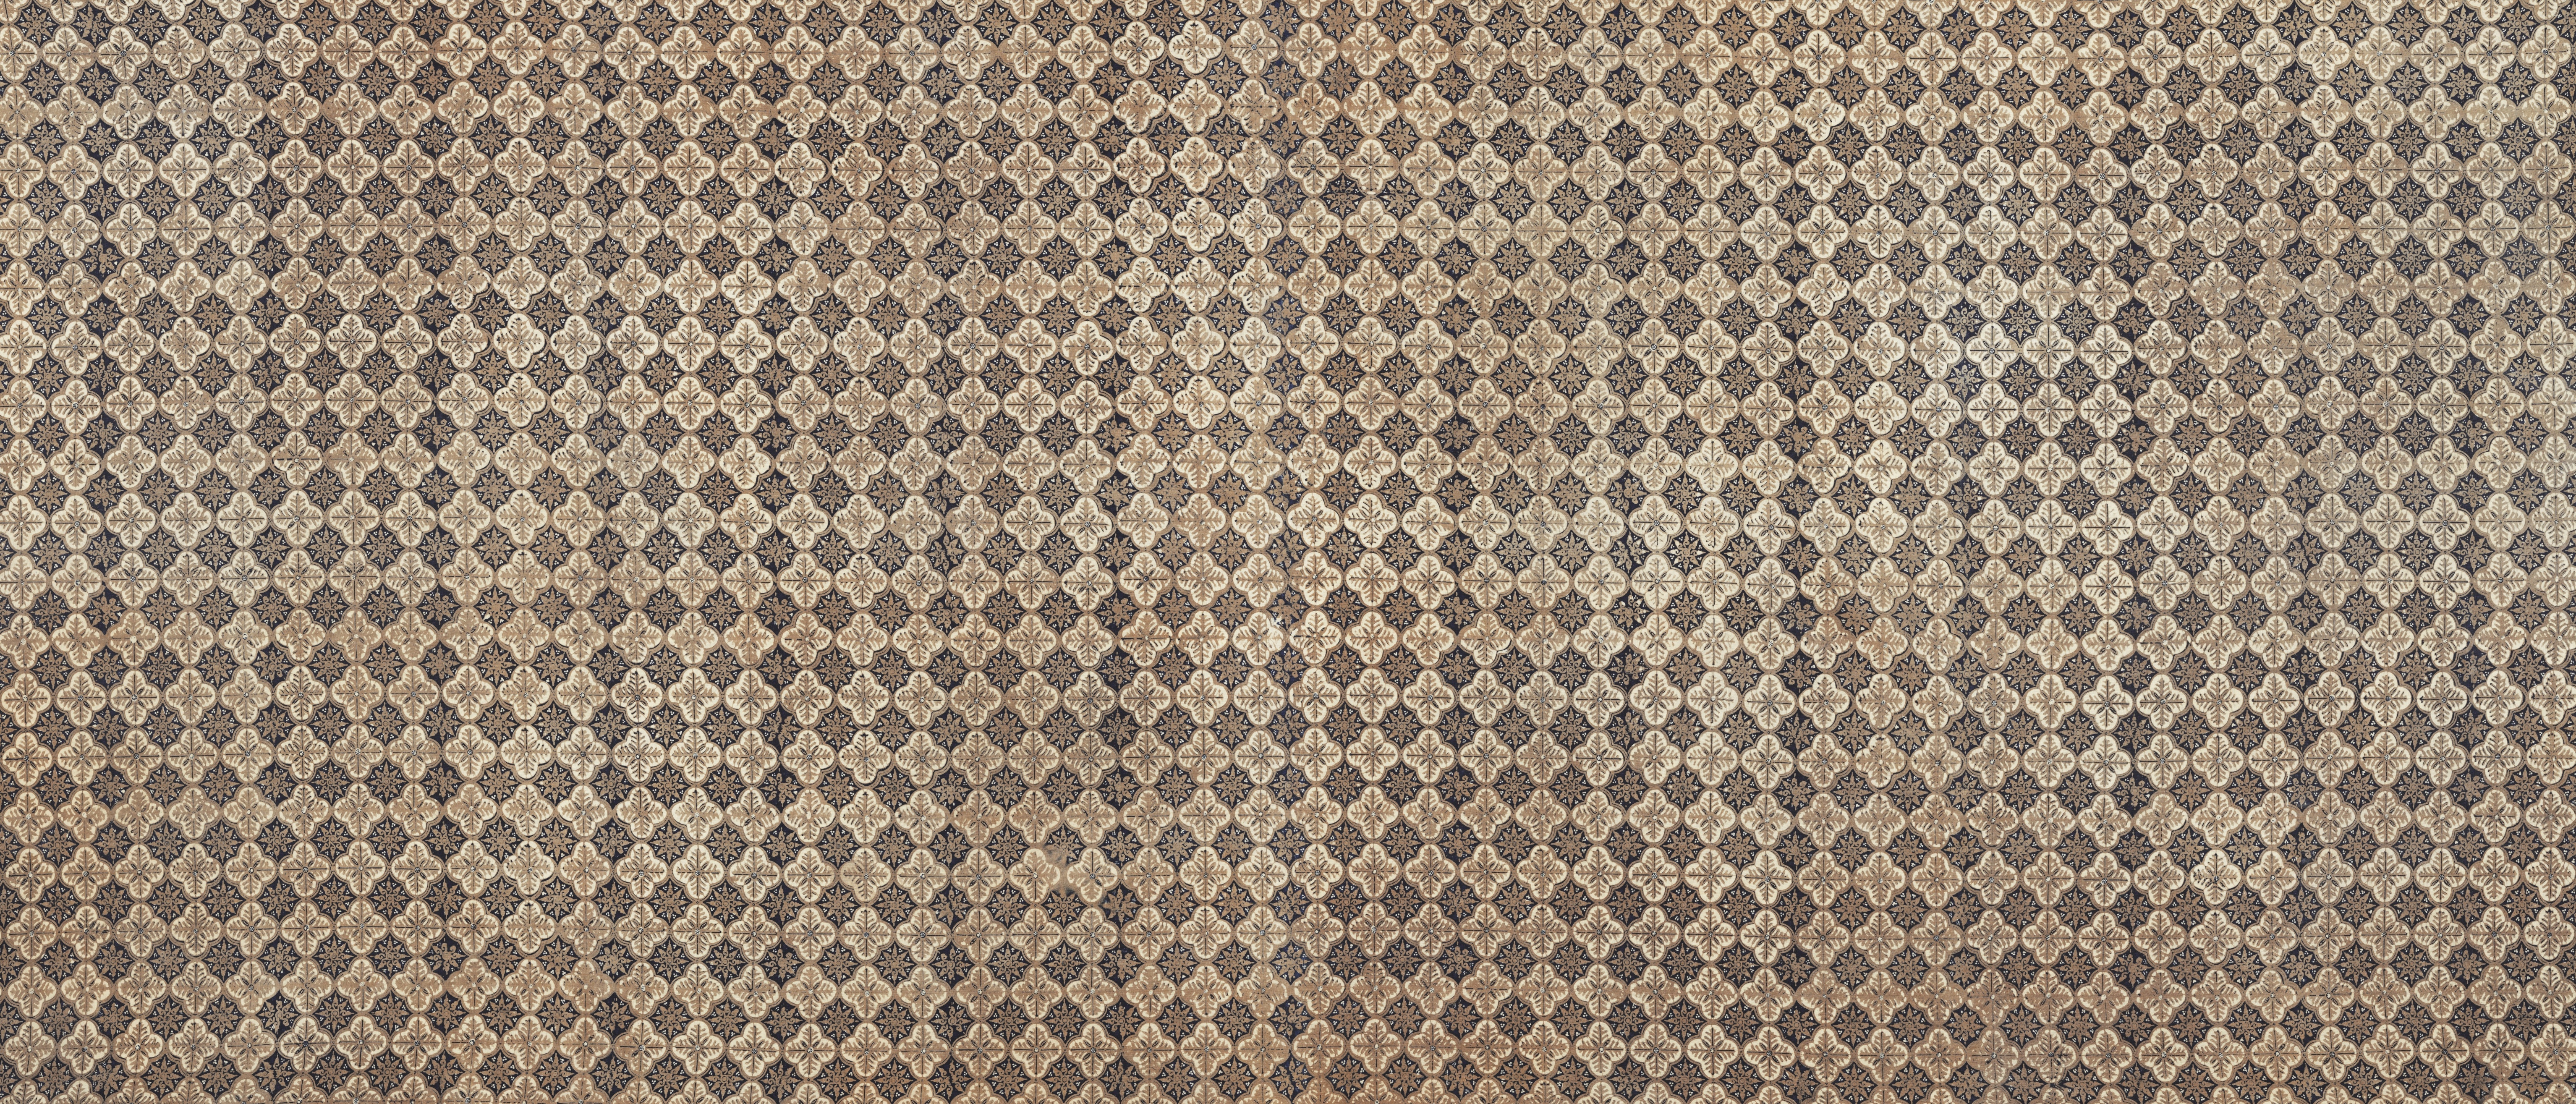 Ultra Wide Ultrawide Fabric Texture Pattern Symmetry 6137x2630